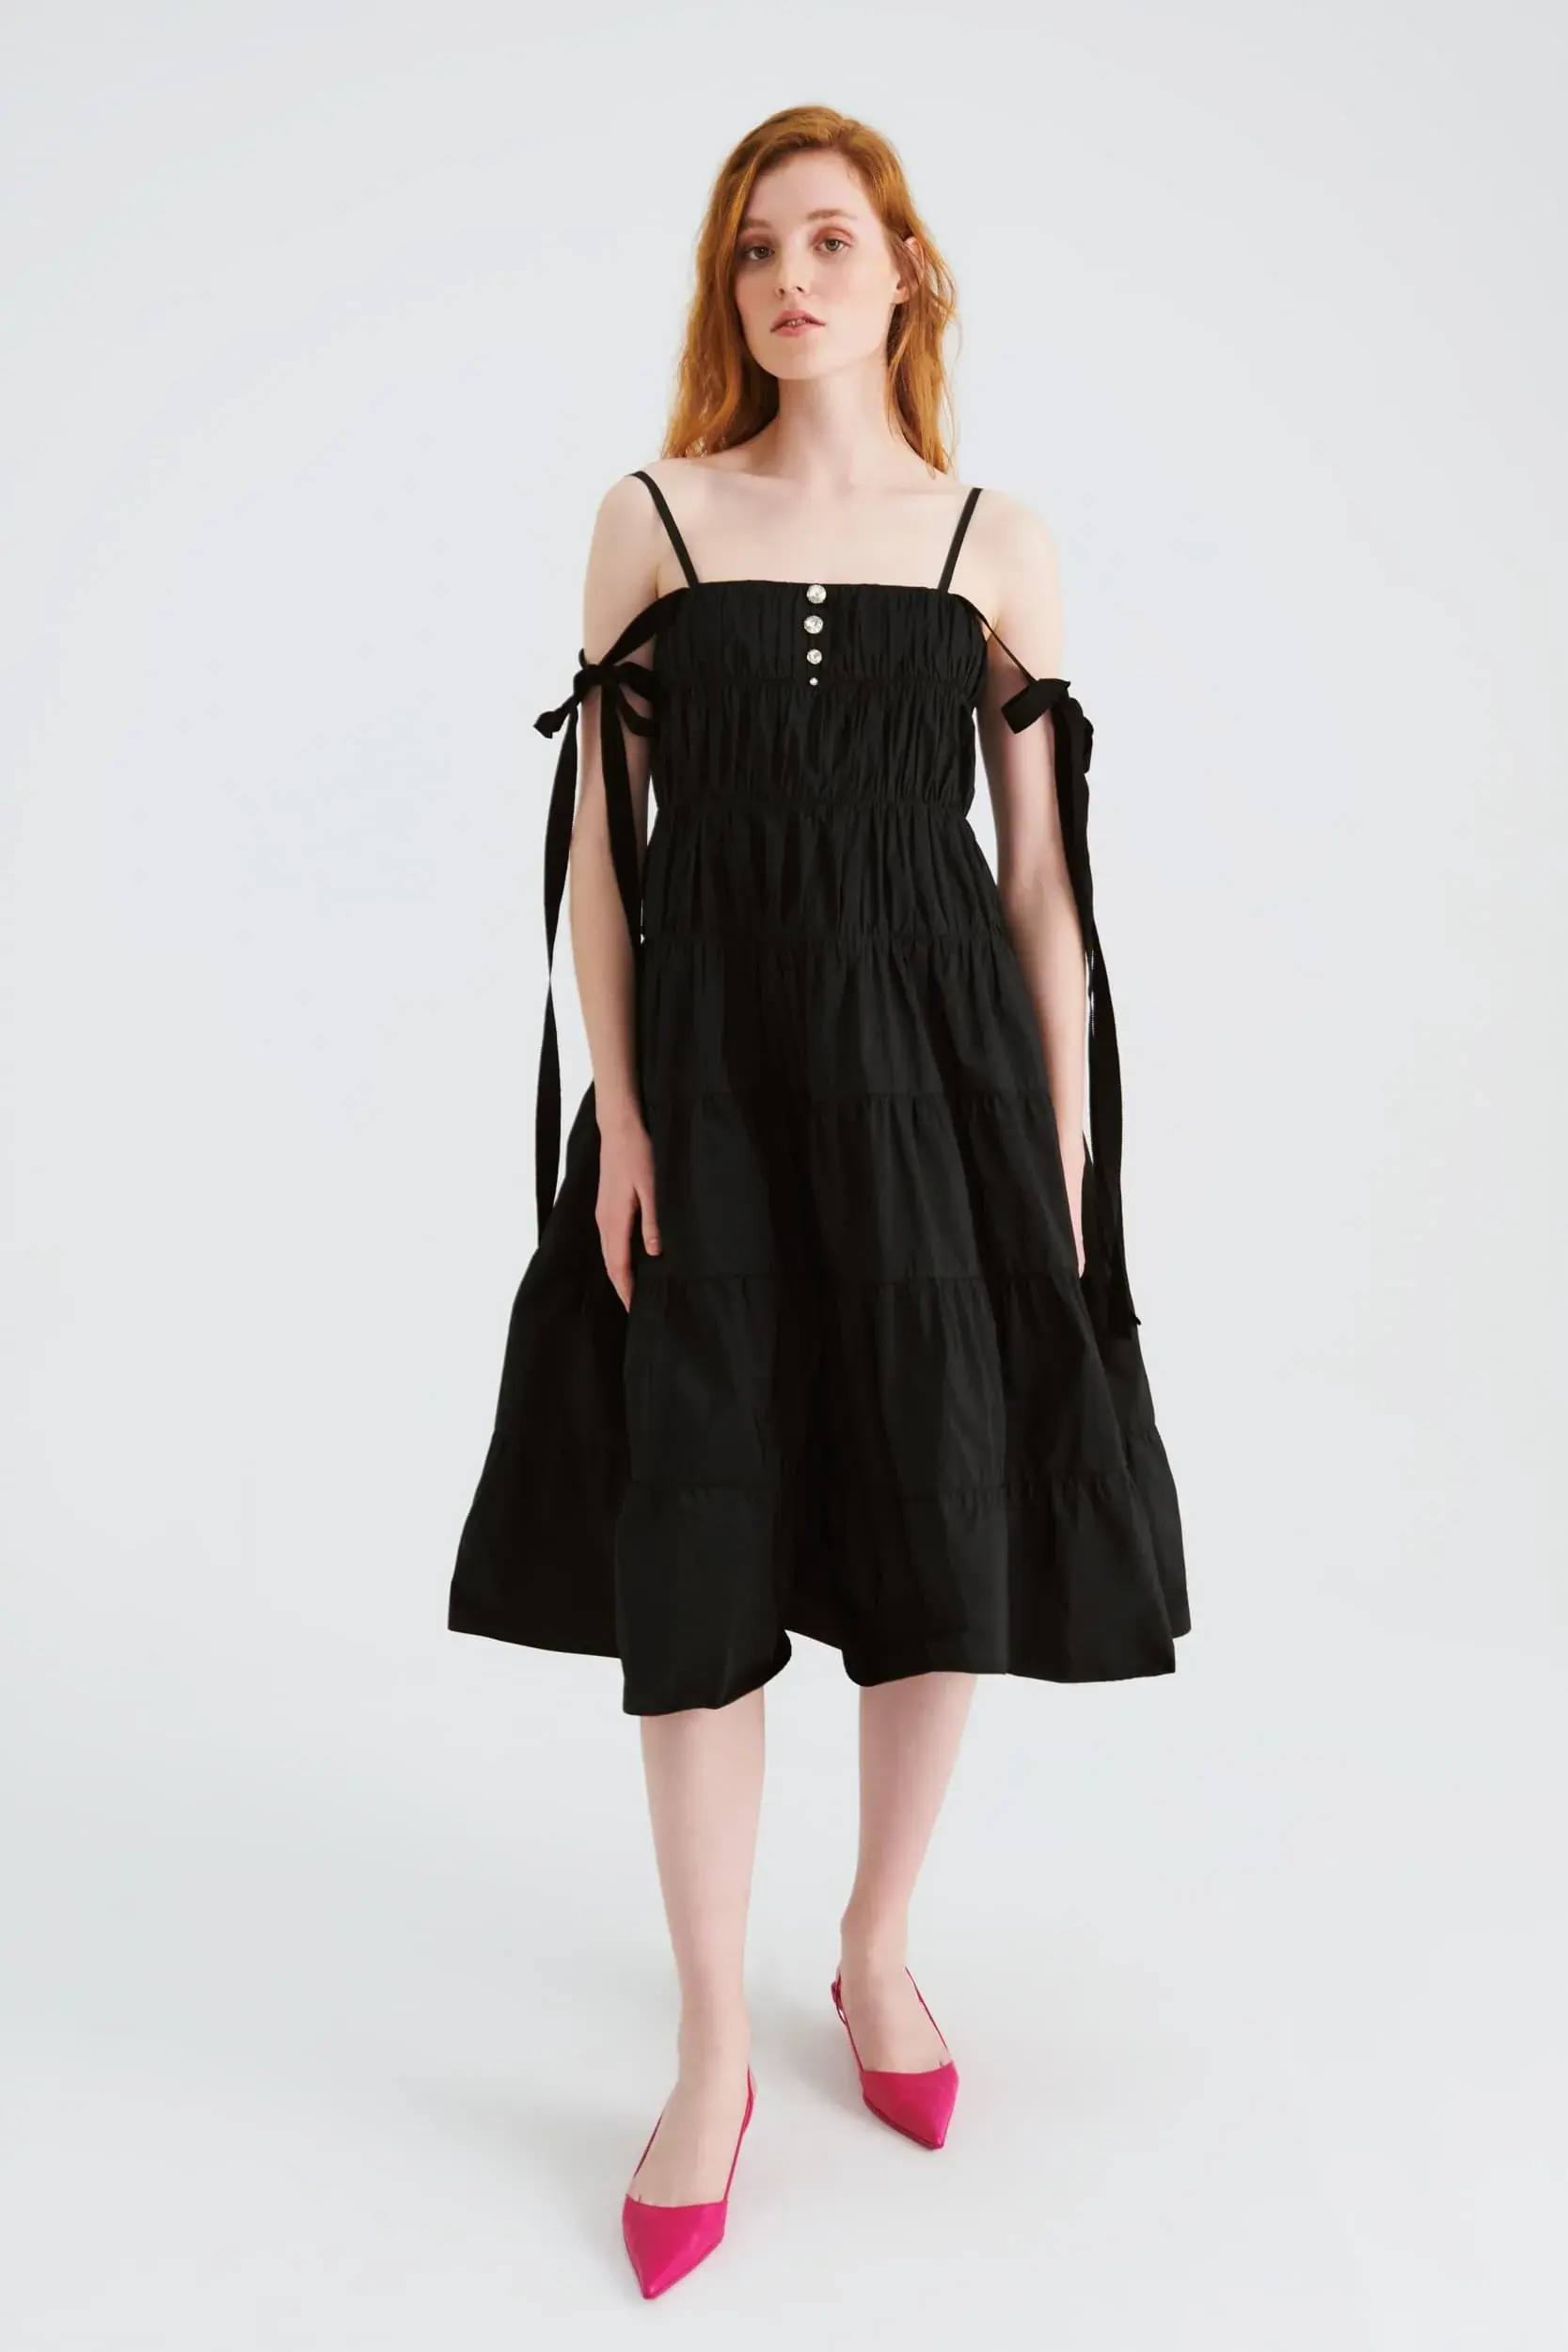 Roman Tiered Black Formal Dress - Conscious Product - 2 / BLACK. 1